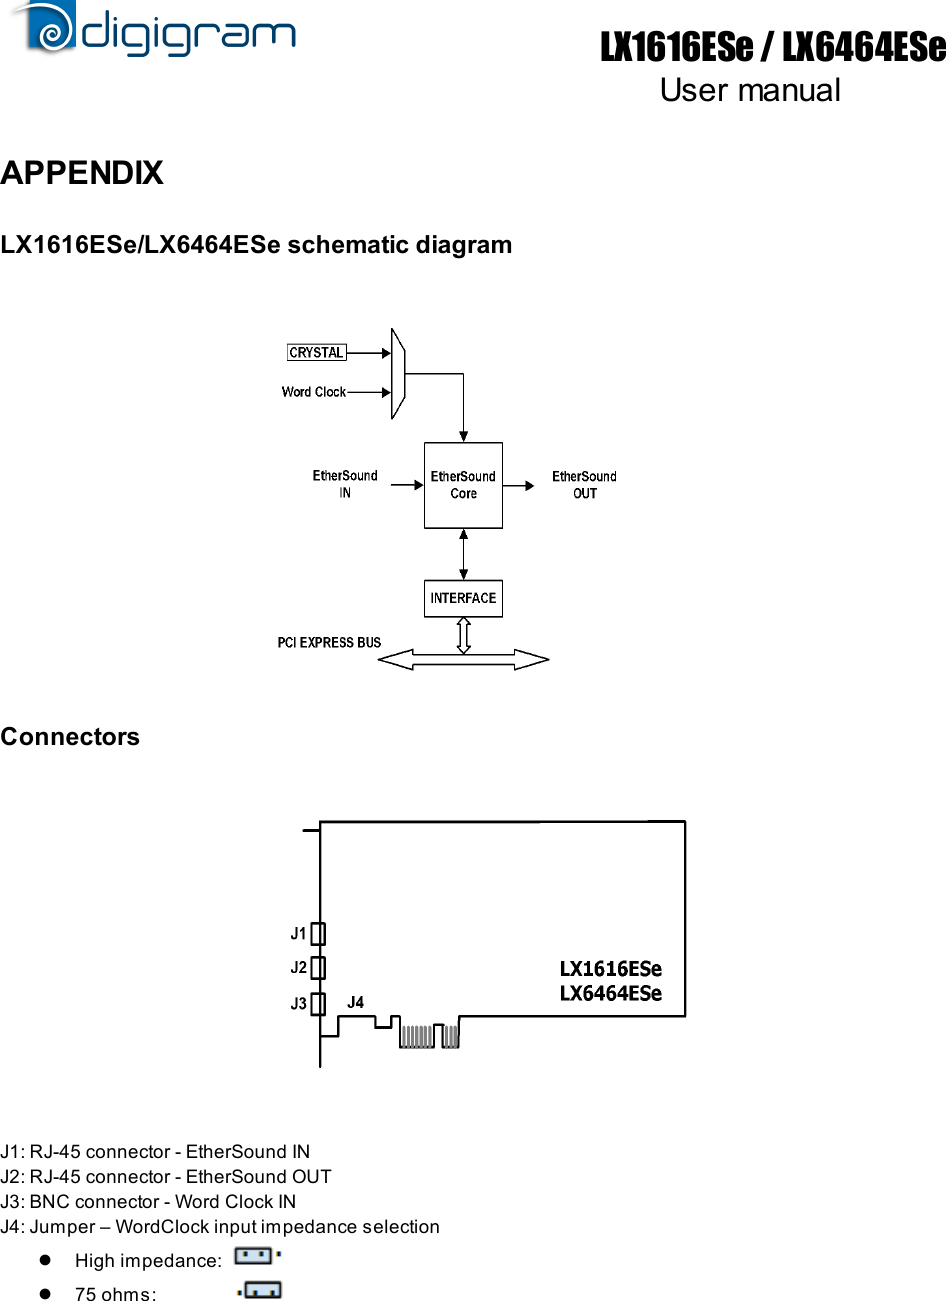 LX1616ESe / LX6464ESe User manual APPENDIX  LX1616ESe/LX6464ESe schematic diagram    Connectors  J1: RJ-45 connector - EtherSound IN J2: RJ-45 connector - EtherSound OUT J3: BNC connector - Word Clock IN J4: Jumper – WordClock input impedance selection ●High impedance:   ●75 ohms:      